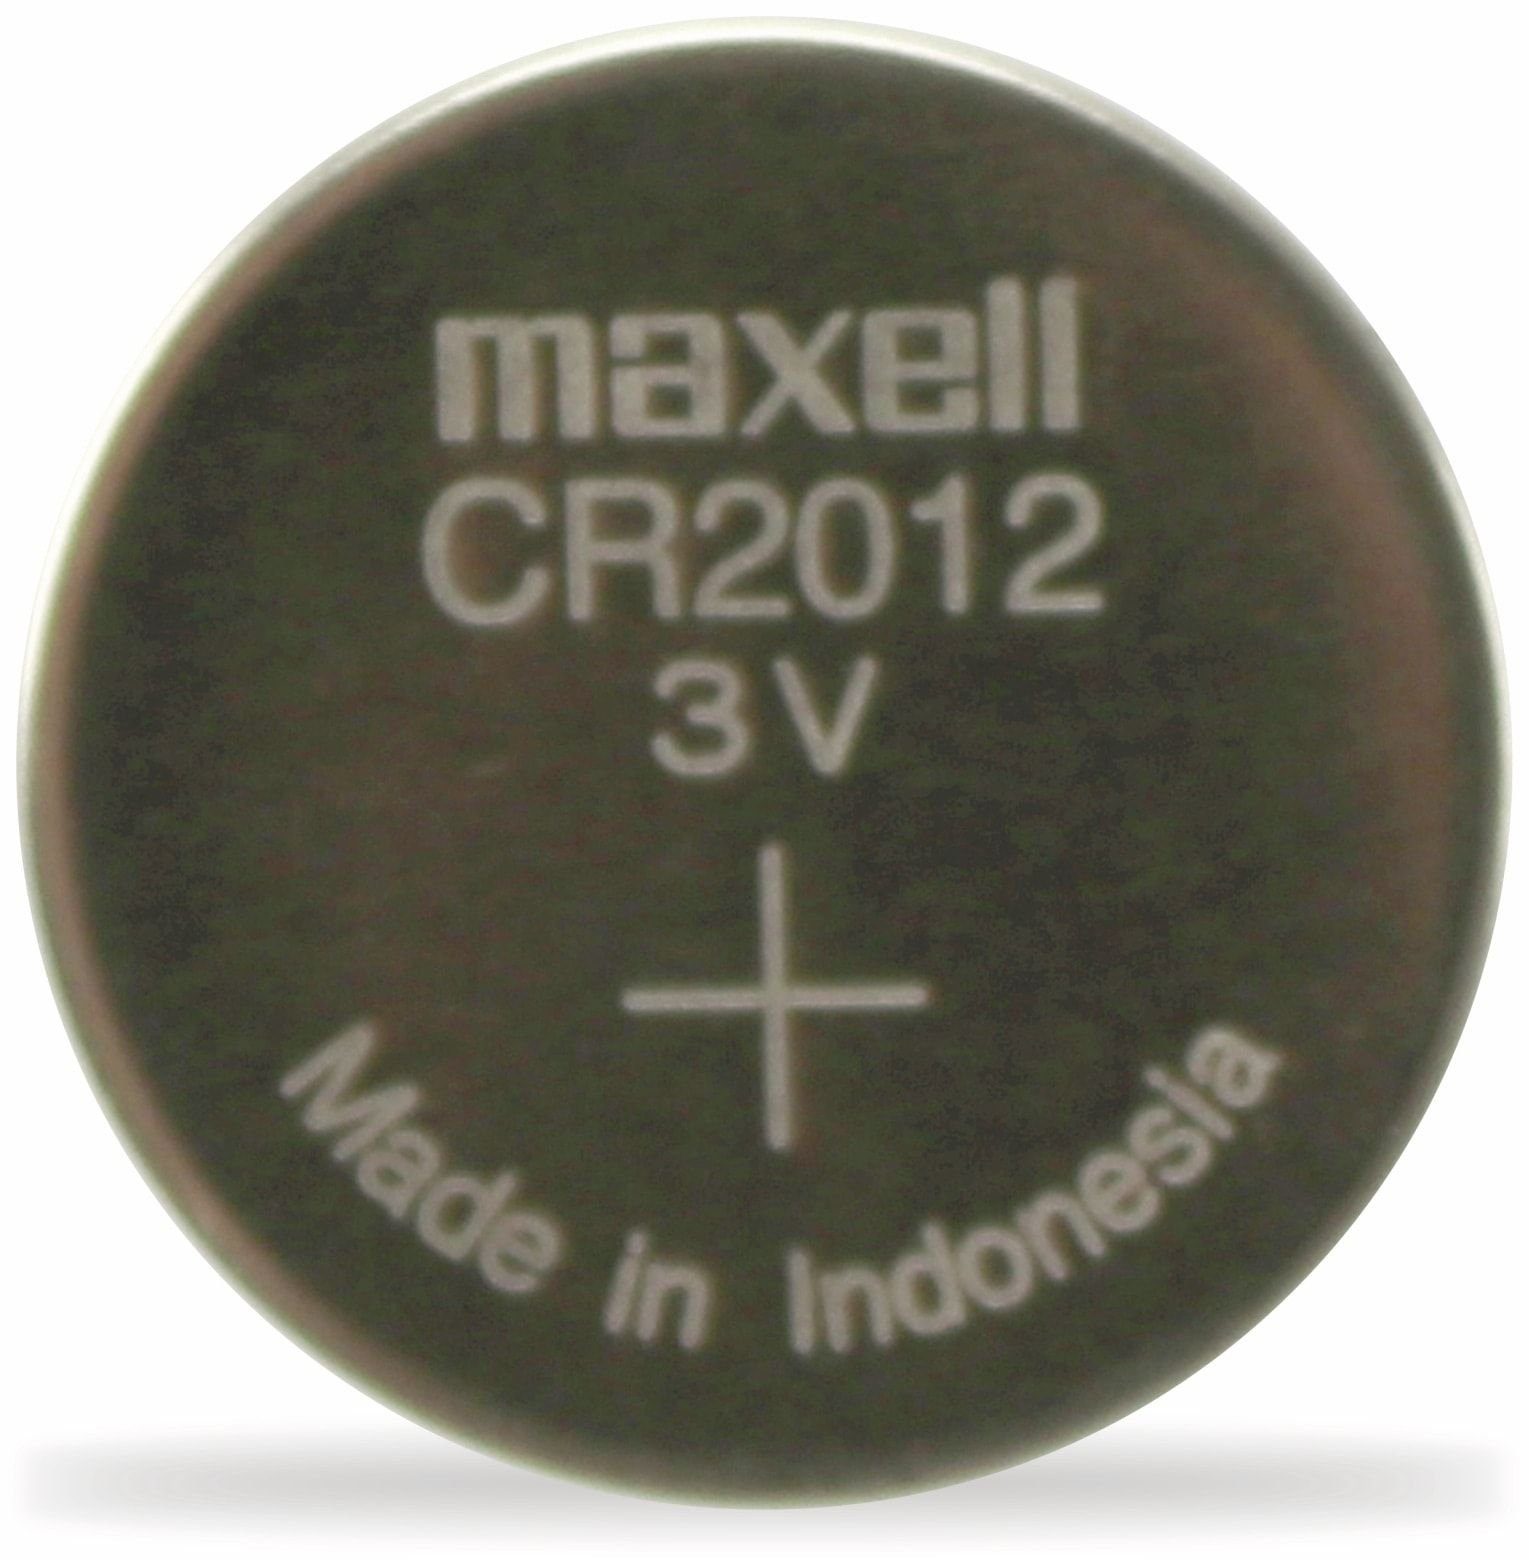 Maxell MAXELL Knopfzelle CR2012, Lithium, 3 V-, 50 mAh, 1 Knopfzelle